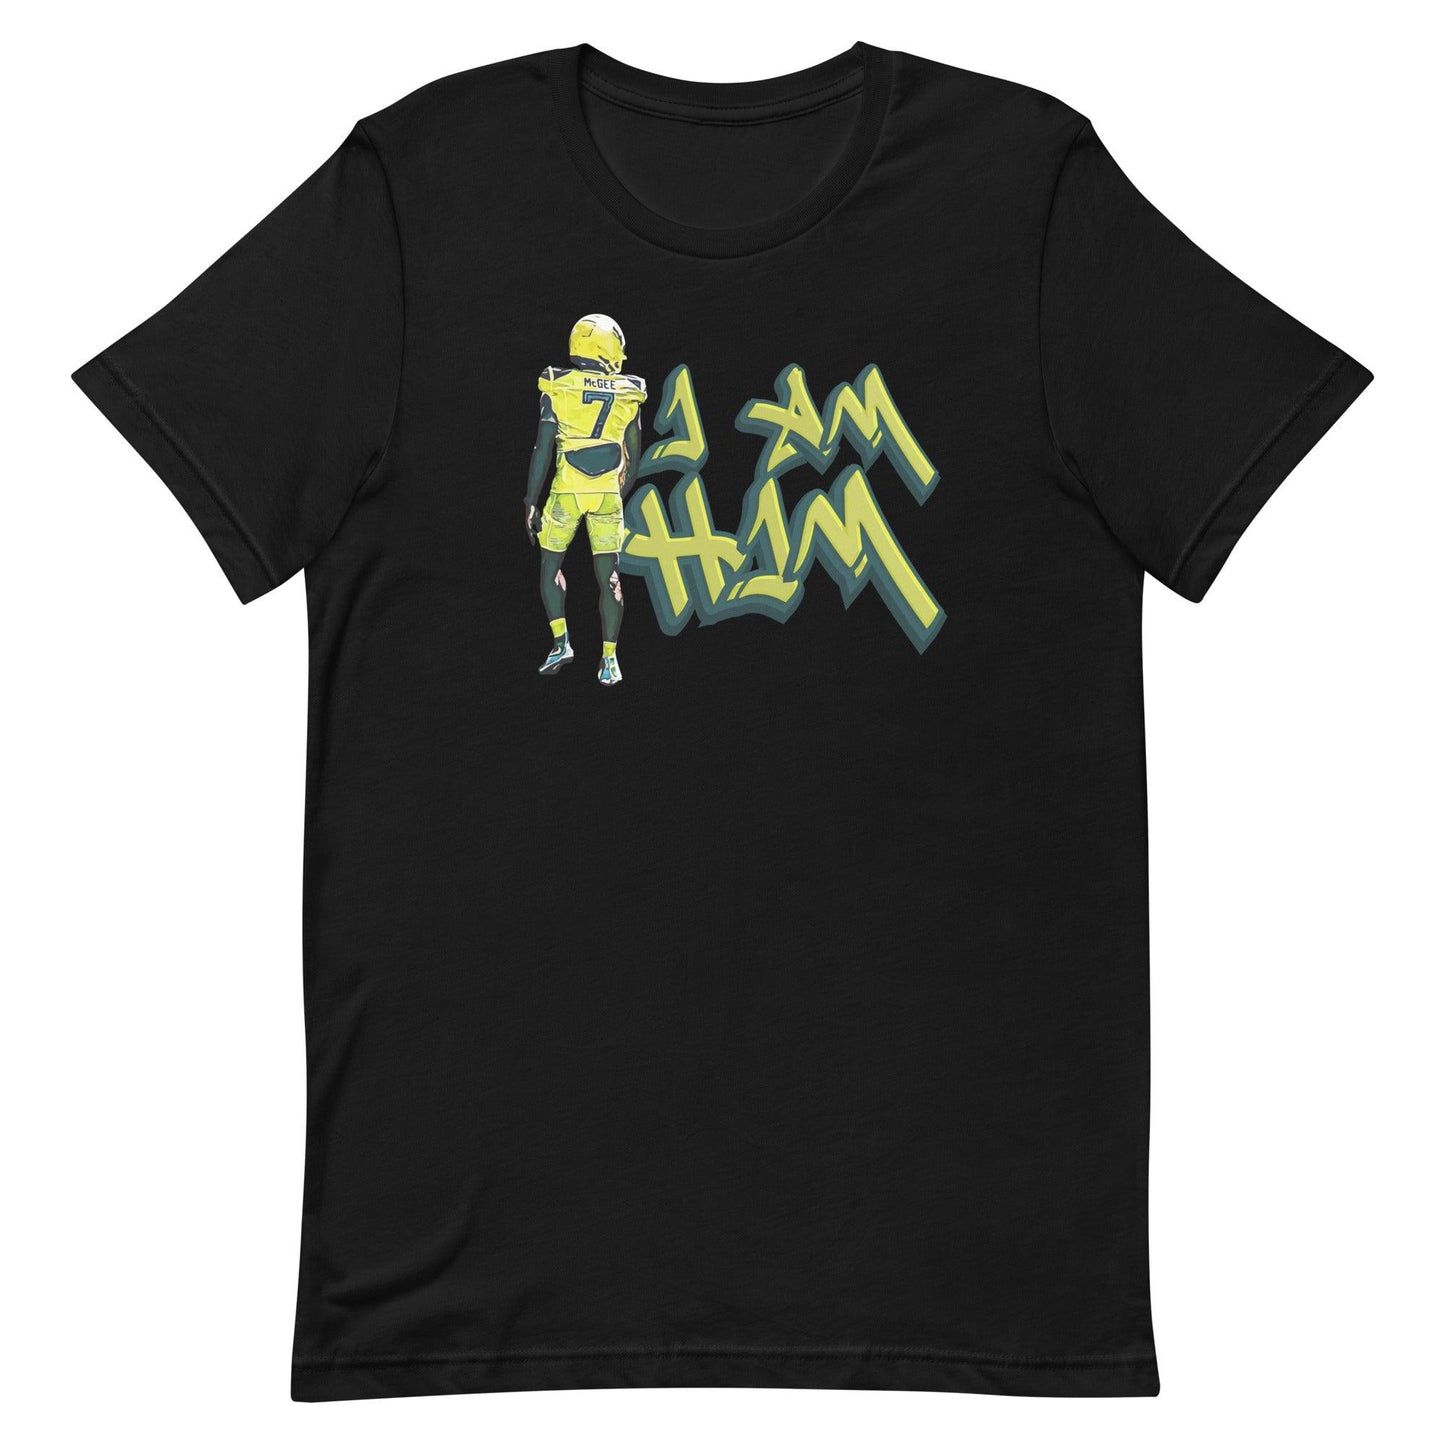 Seven McGee "I AM HIM" t-shirt - Fan Arch